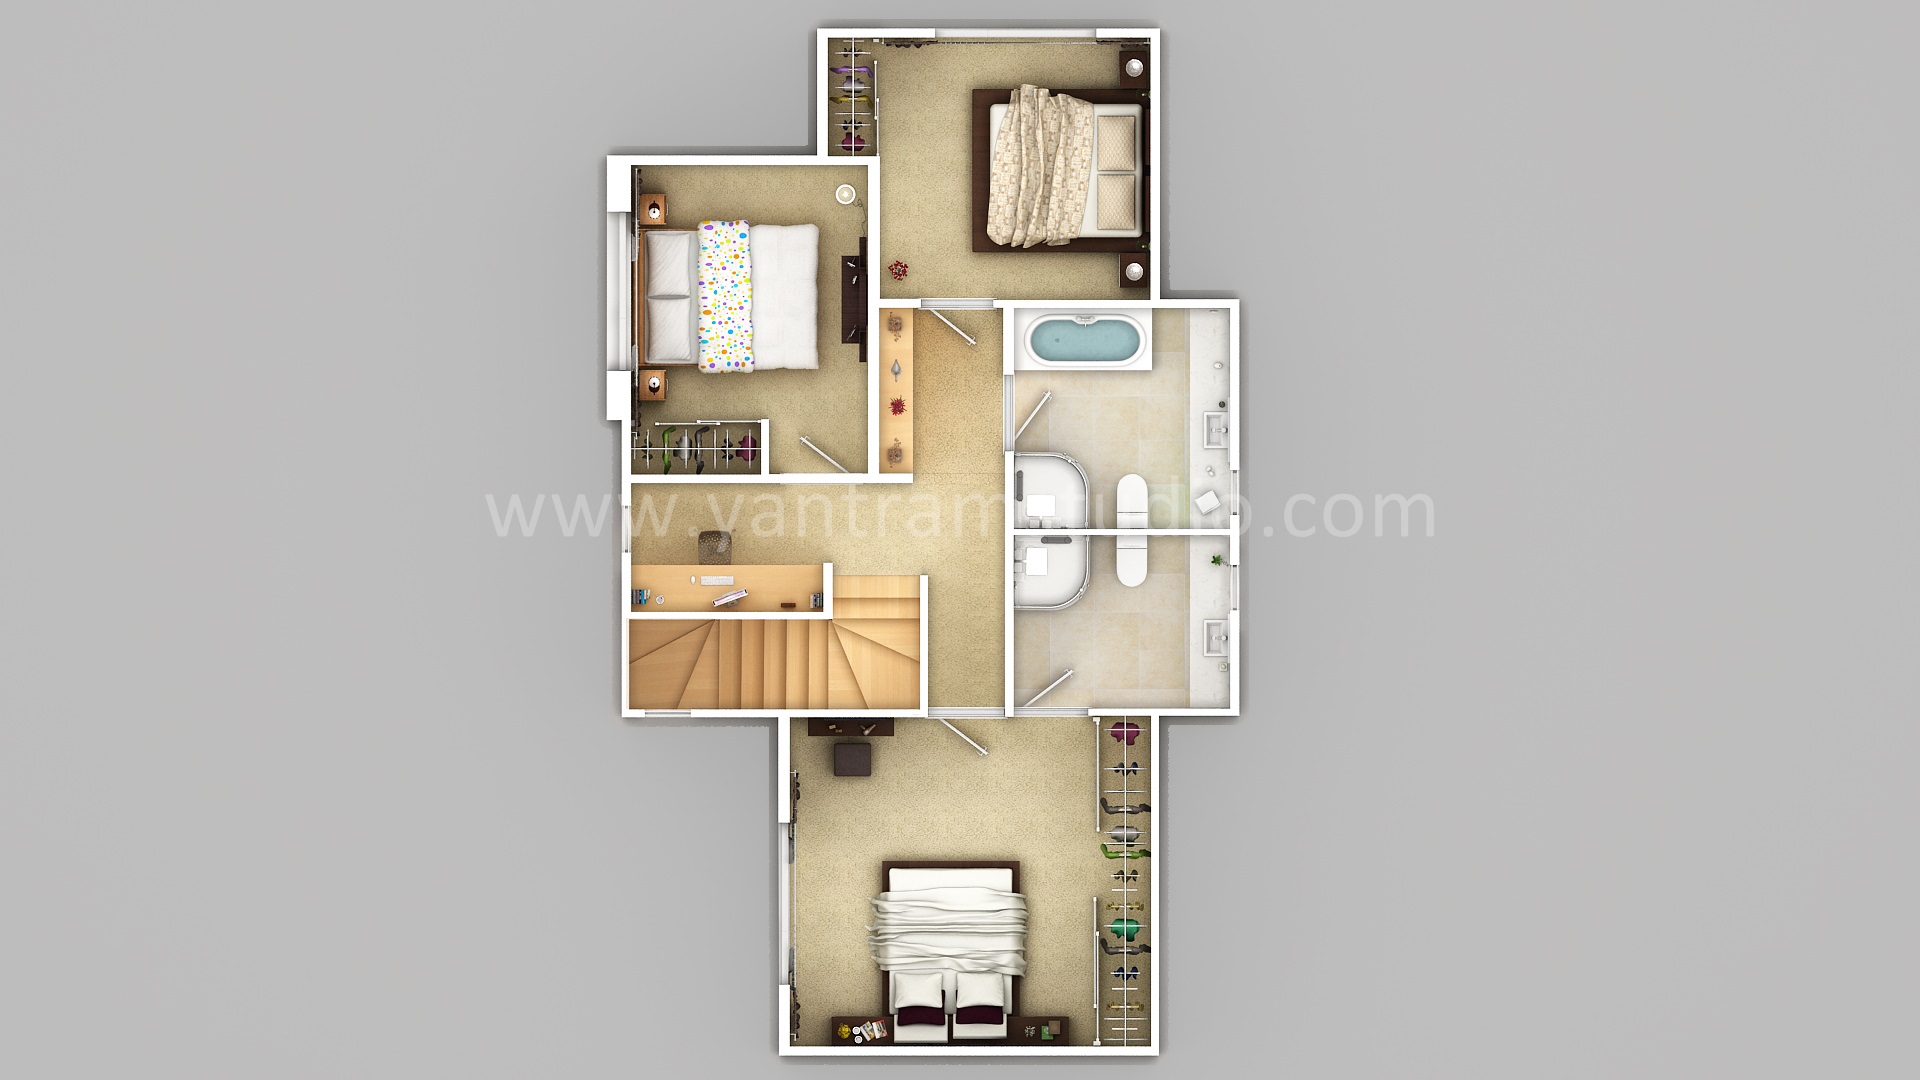 House Plan in 2D Model - 2d floor Plan Maker by Yantramarchitecturaldesignstudio